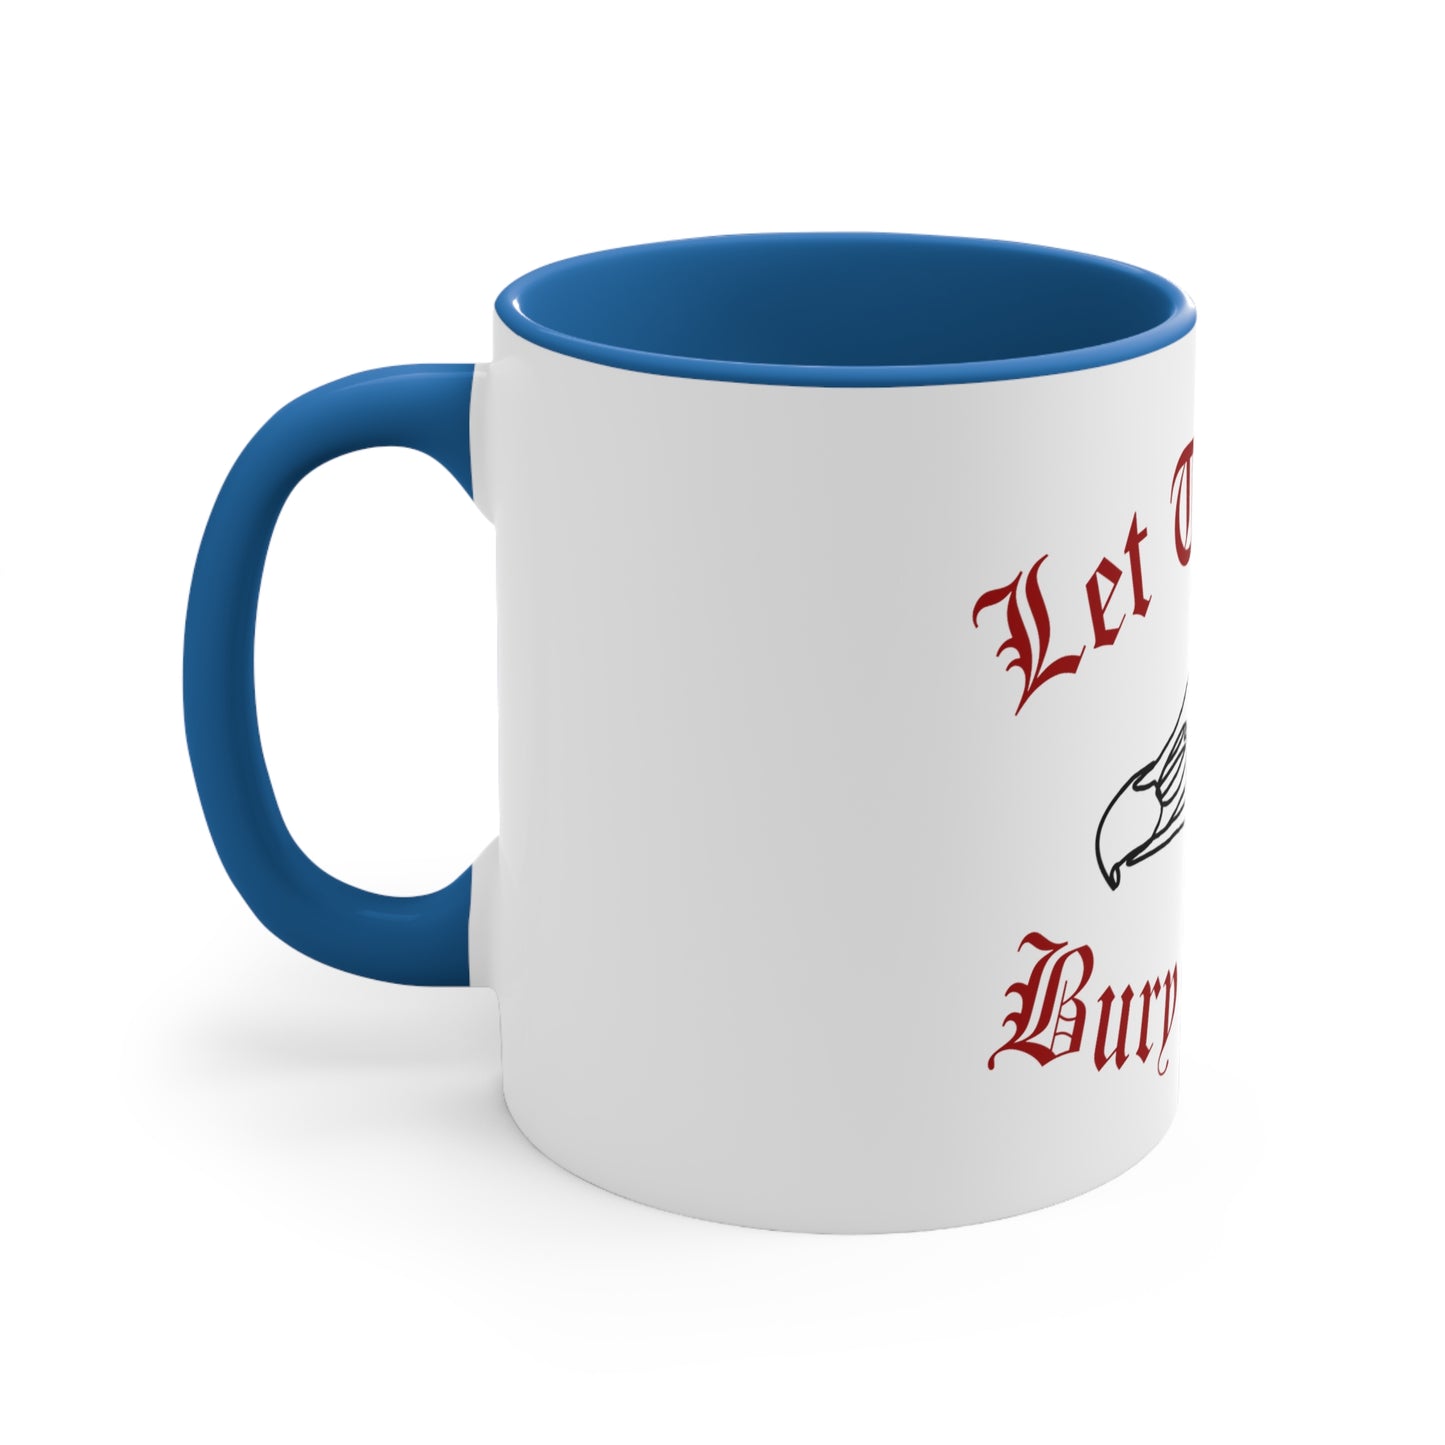 Let The Dead Bury The Dead Accent Coffee Mug, 11oz